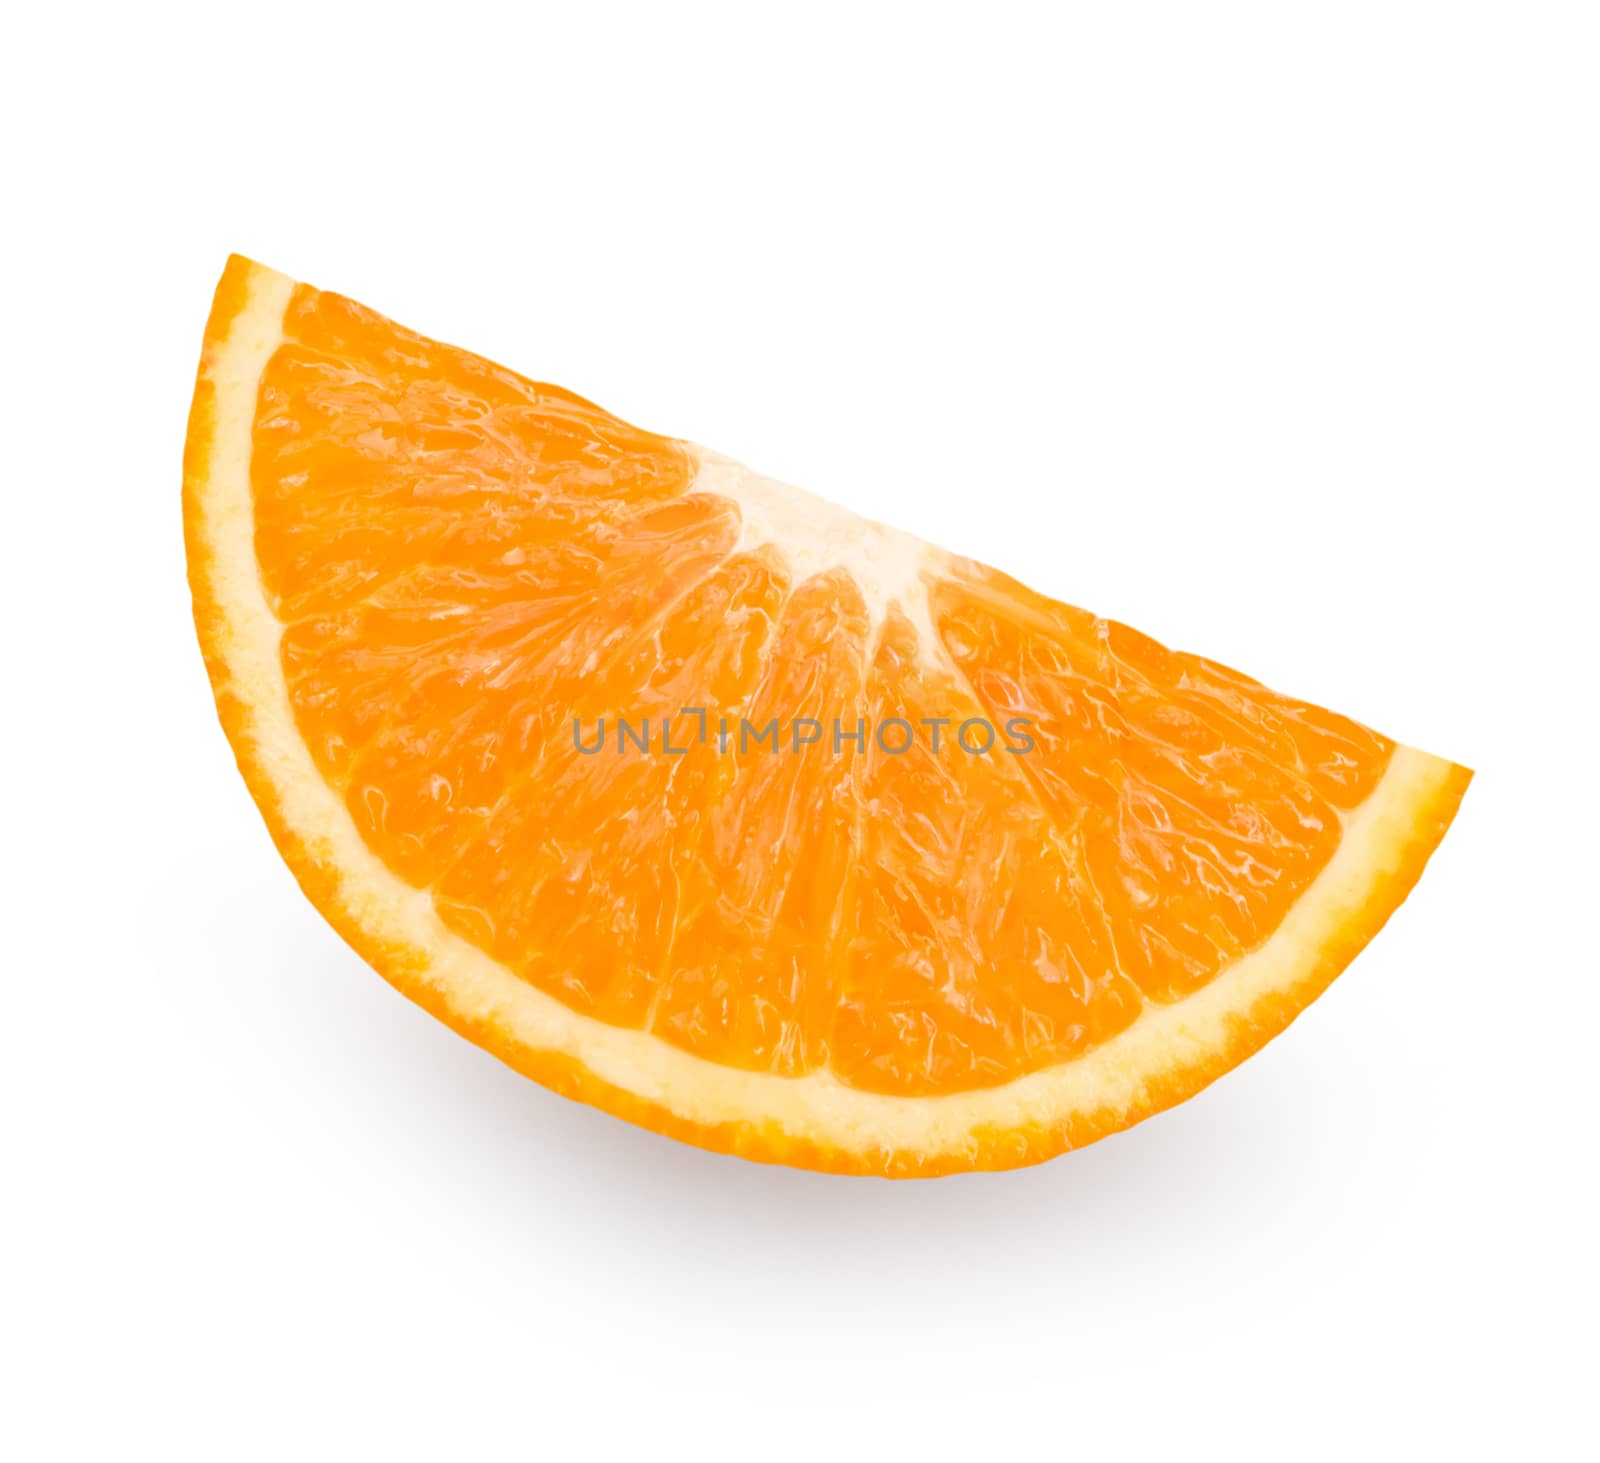 Fresh orange fruit slice on white background with clipping path by pt.pongsak@gmail.com